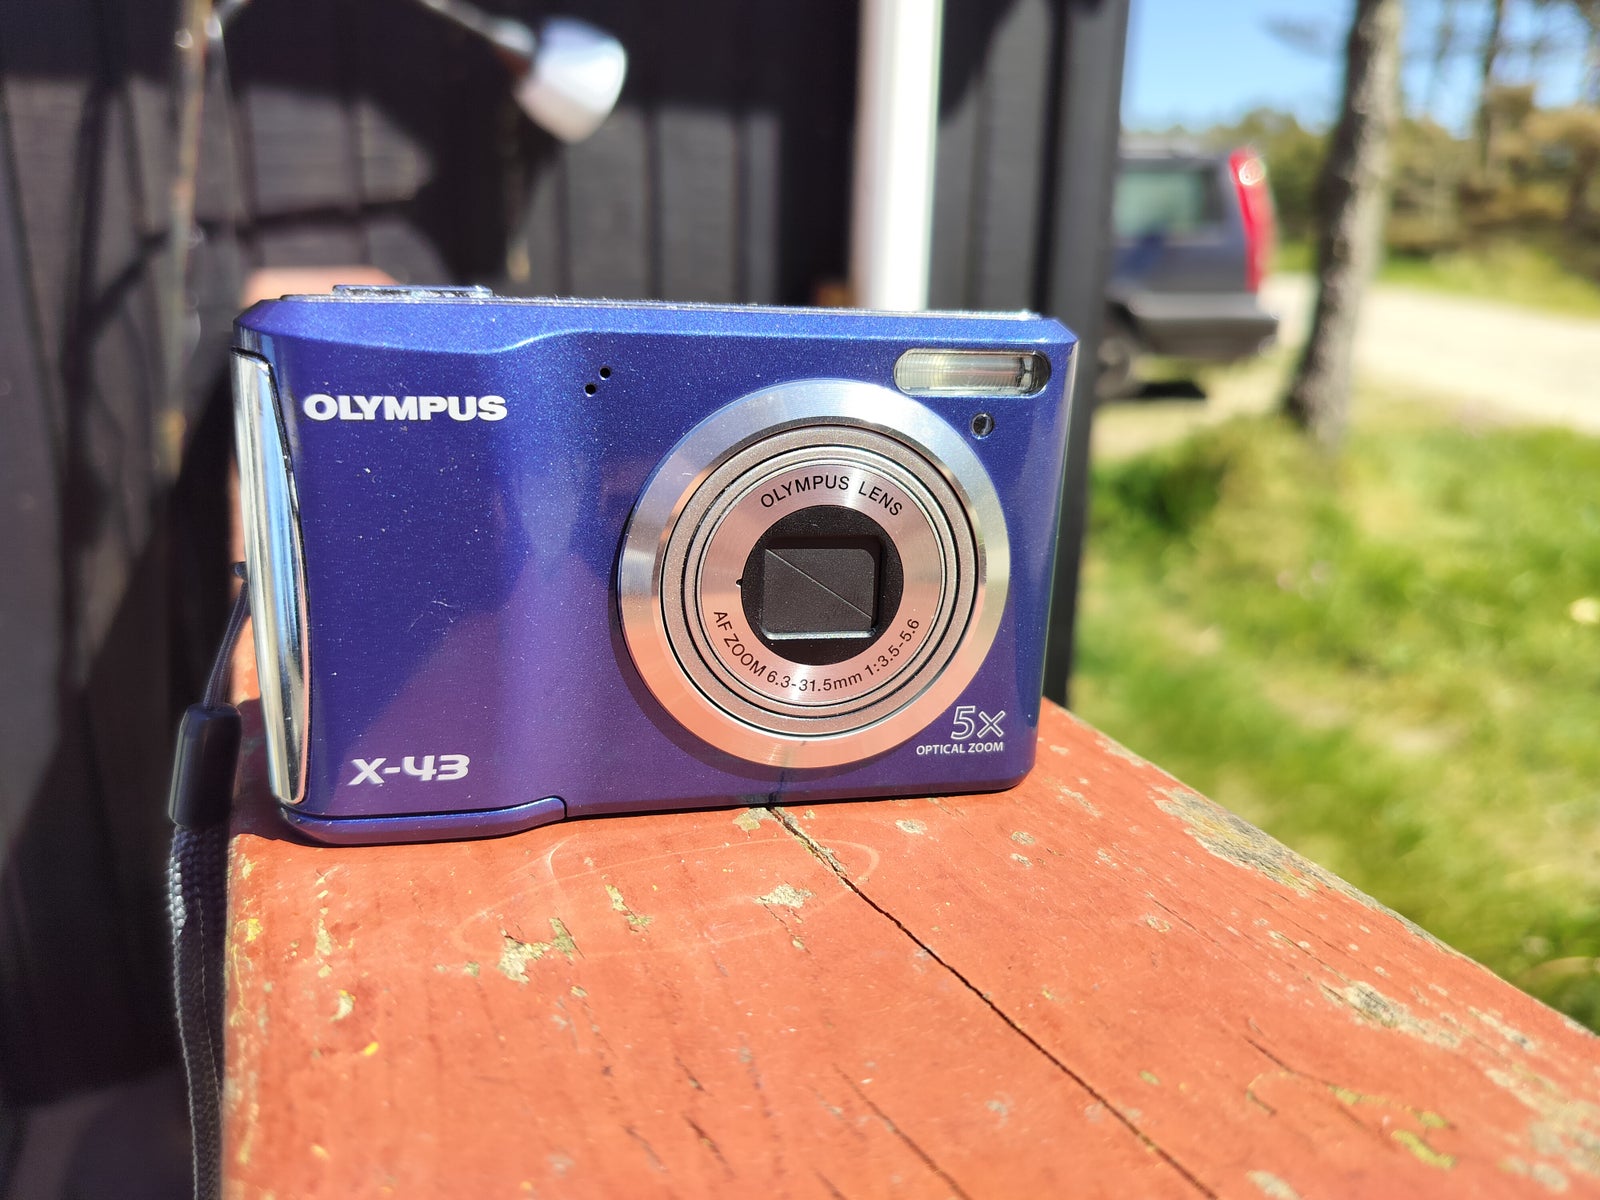 Olympus X-43, 14.0 megapixels, 5 x optisk zoom